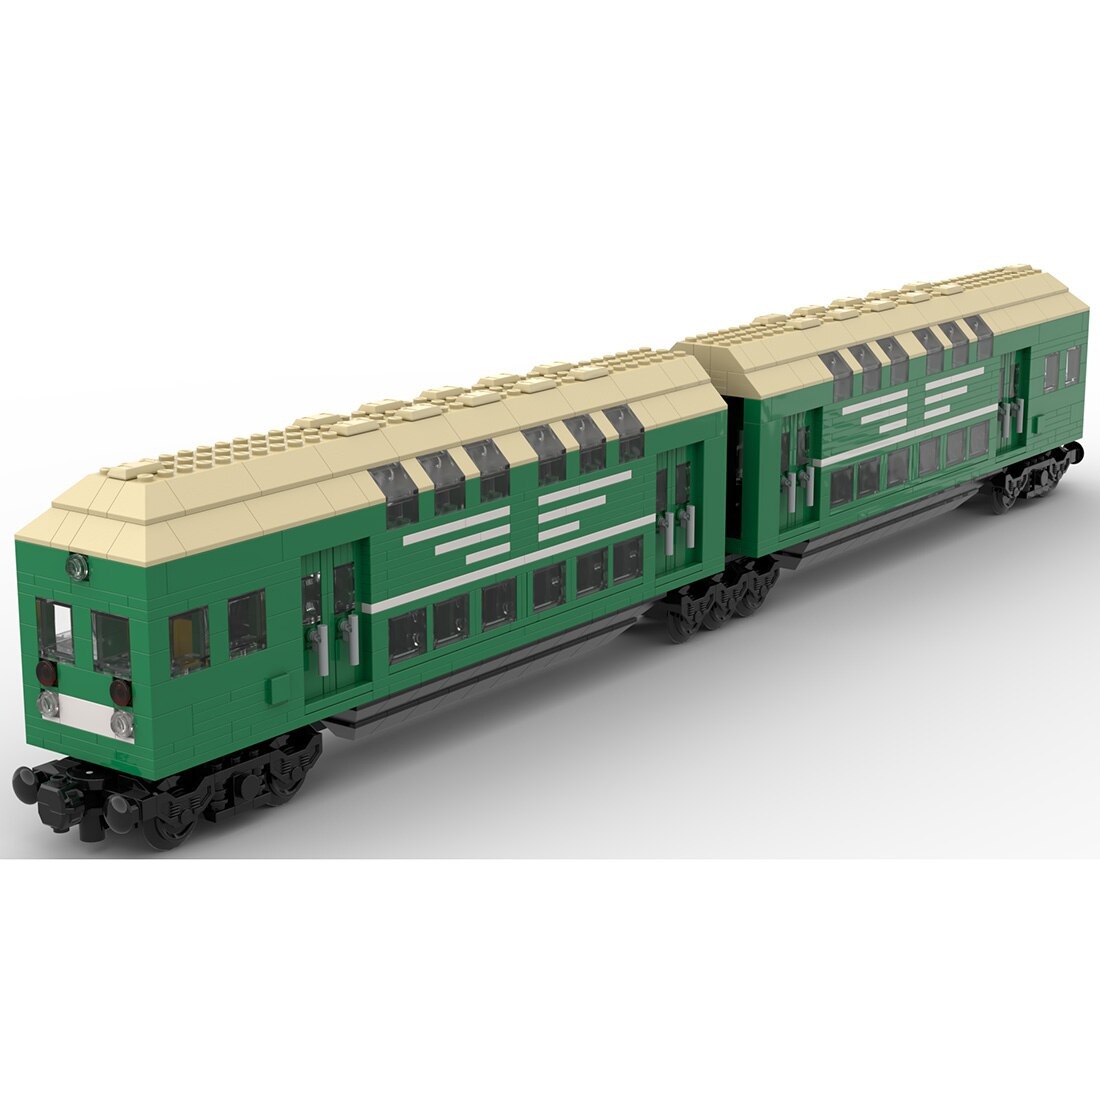 authorized moc 109281 7 axle train carri main 5 1 - CADA Block